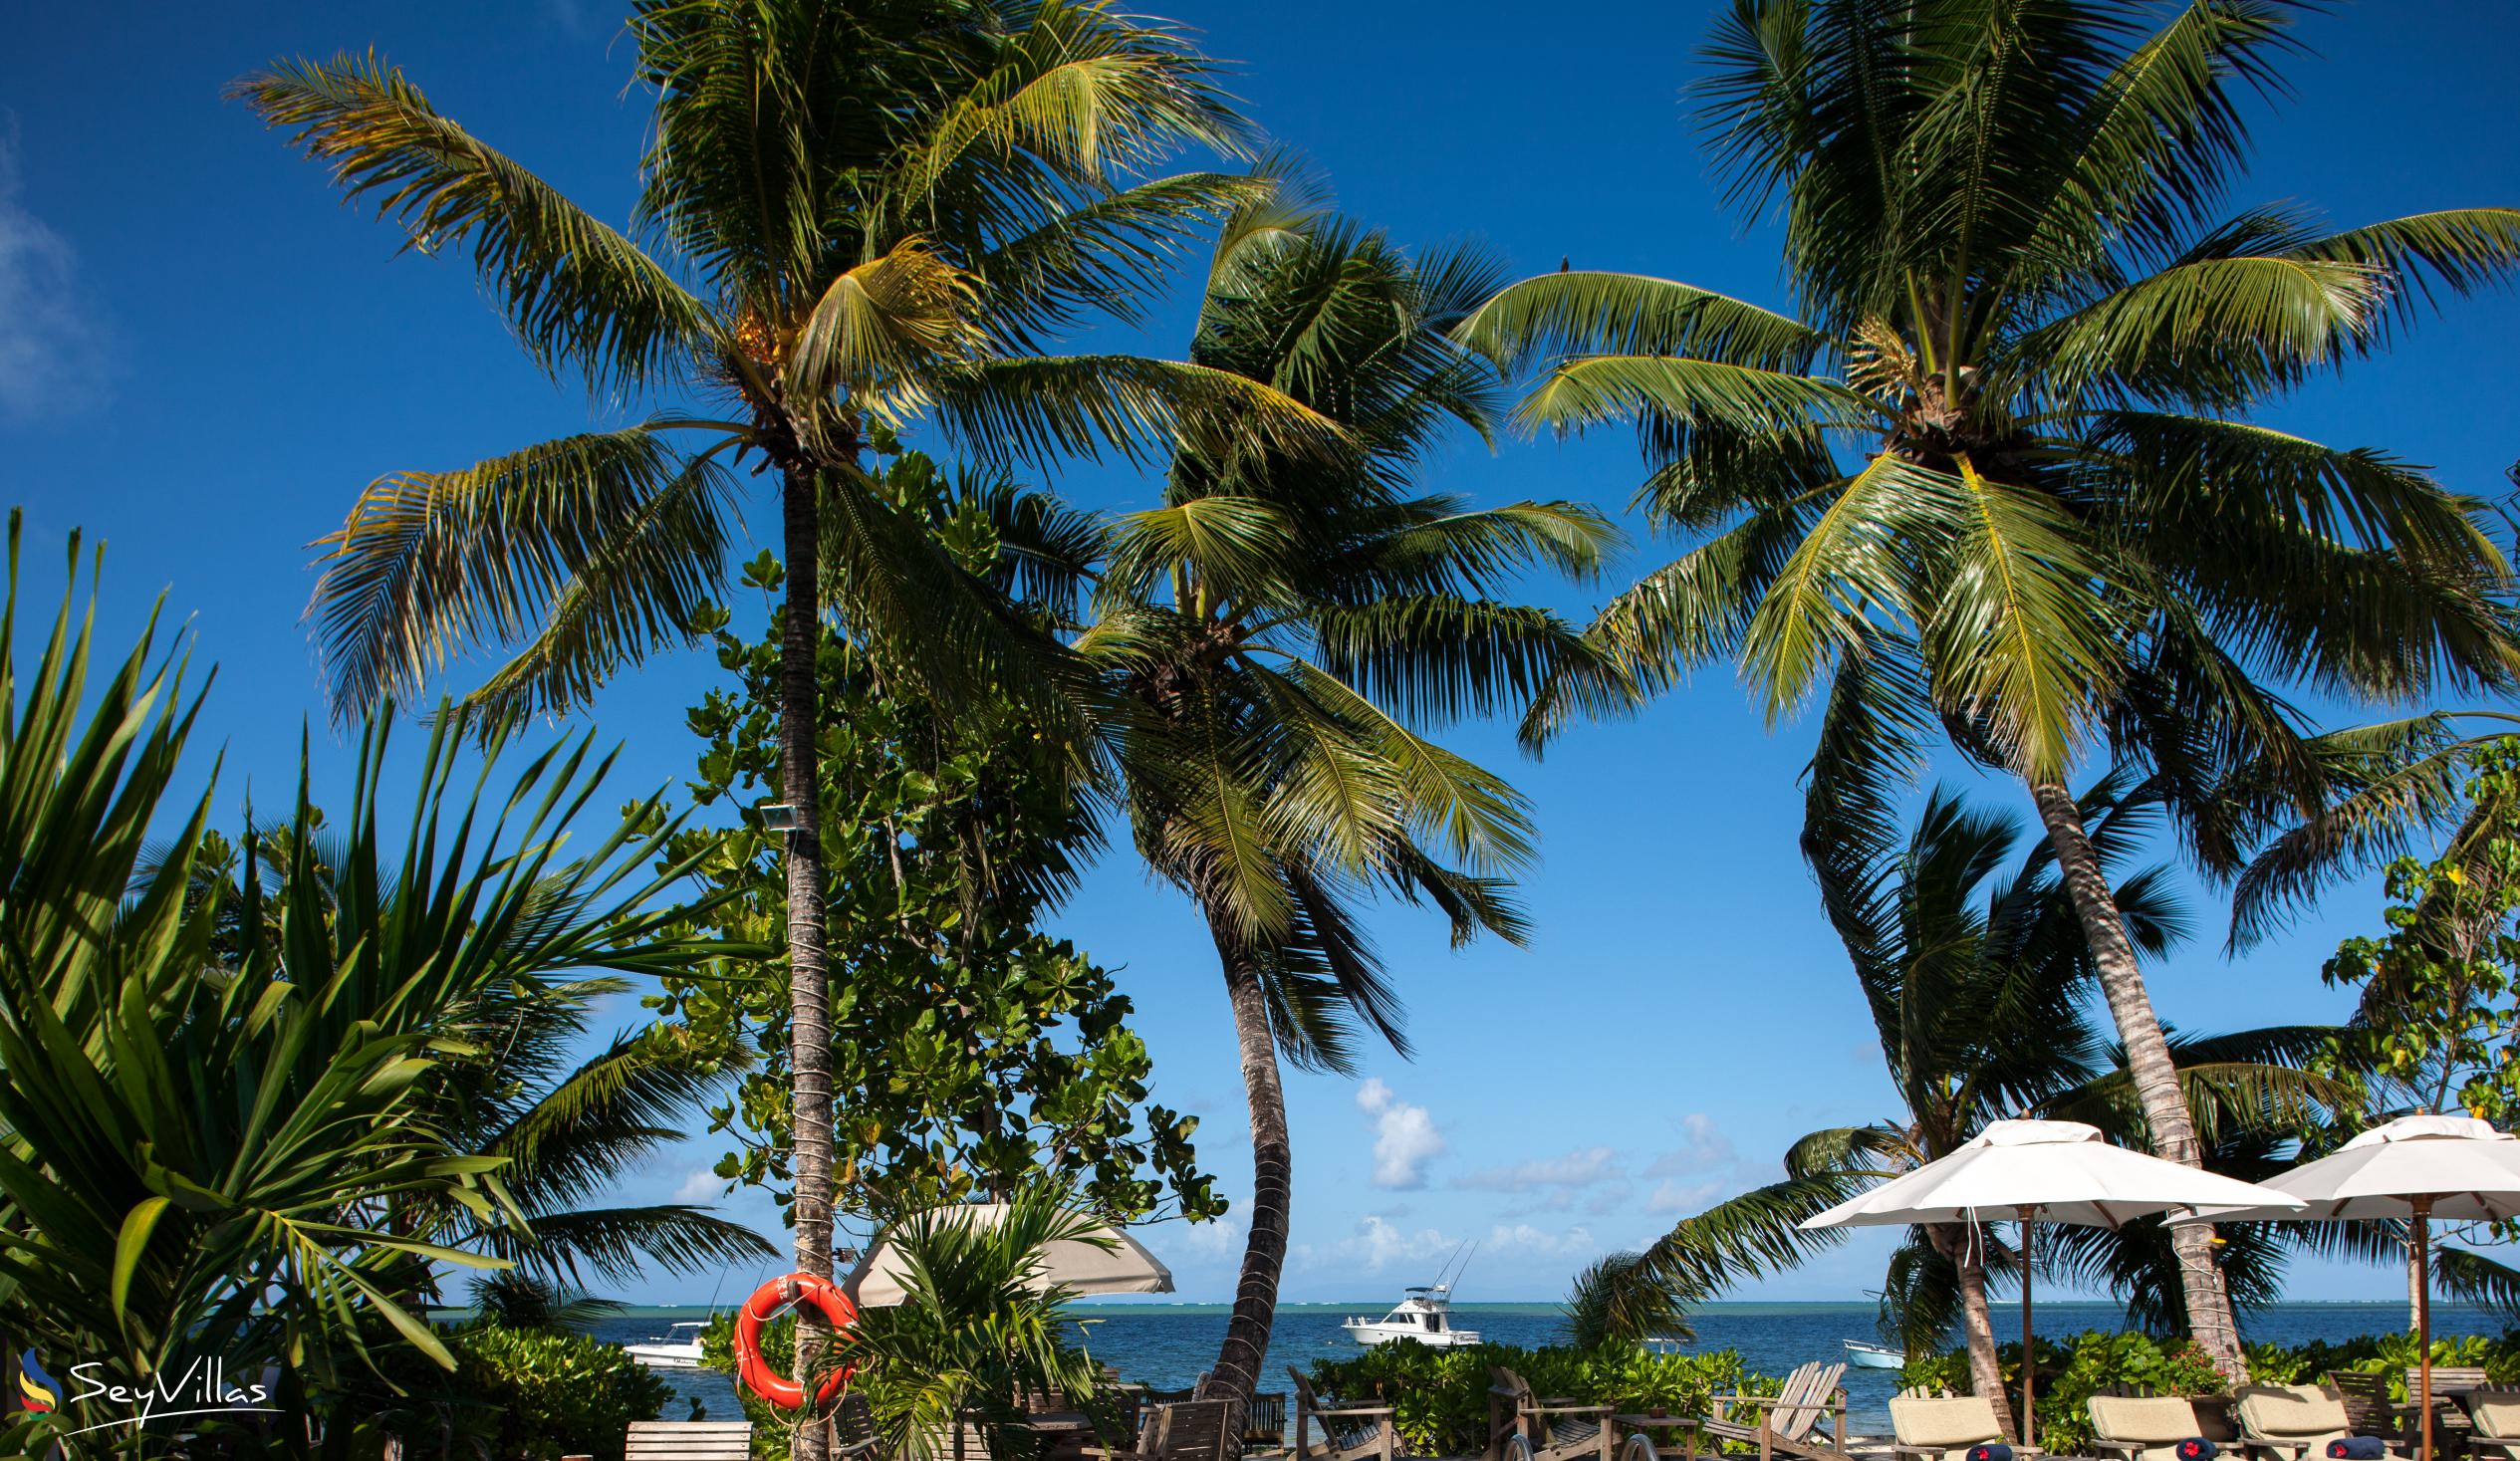 Photo 4: Indian Ocean Lodge - Outdoor area - Praslin (Seychelles)